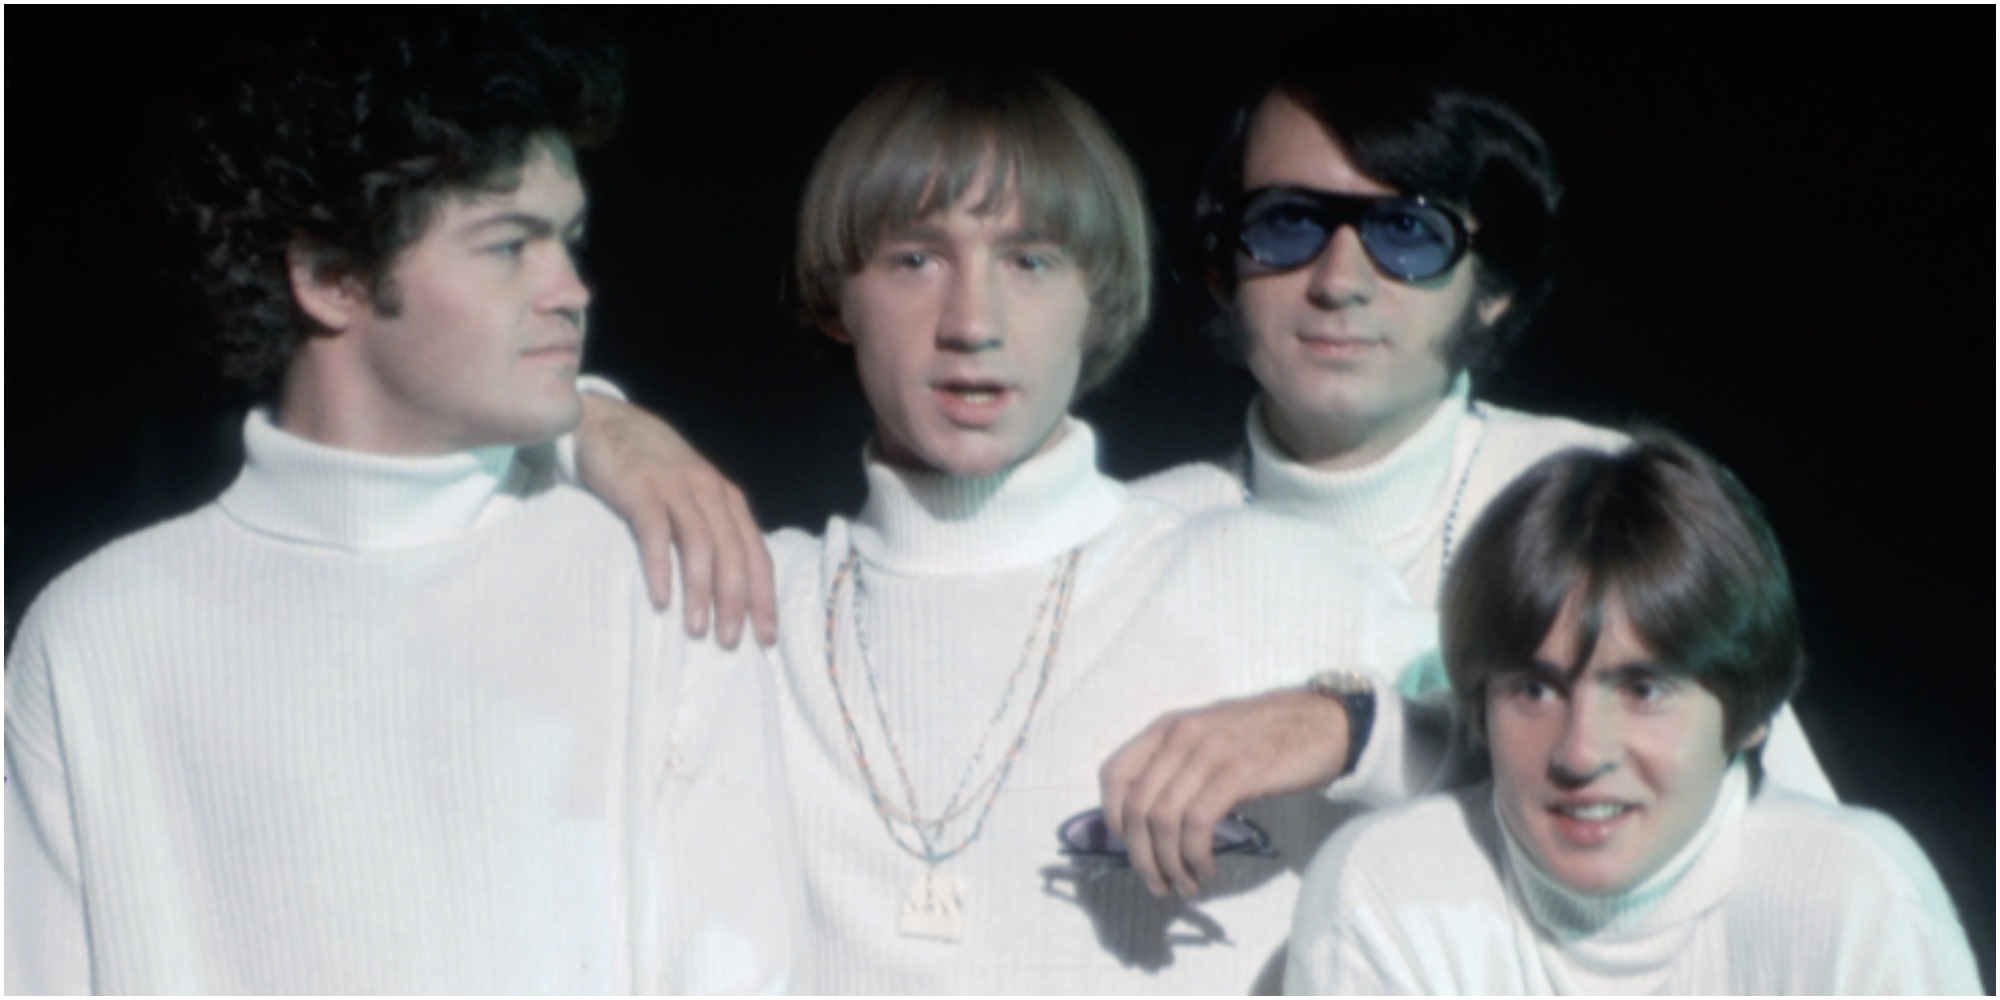 The Monkees dressed in white turtlenecks.